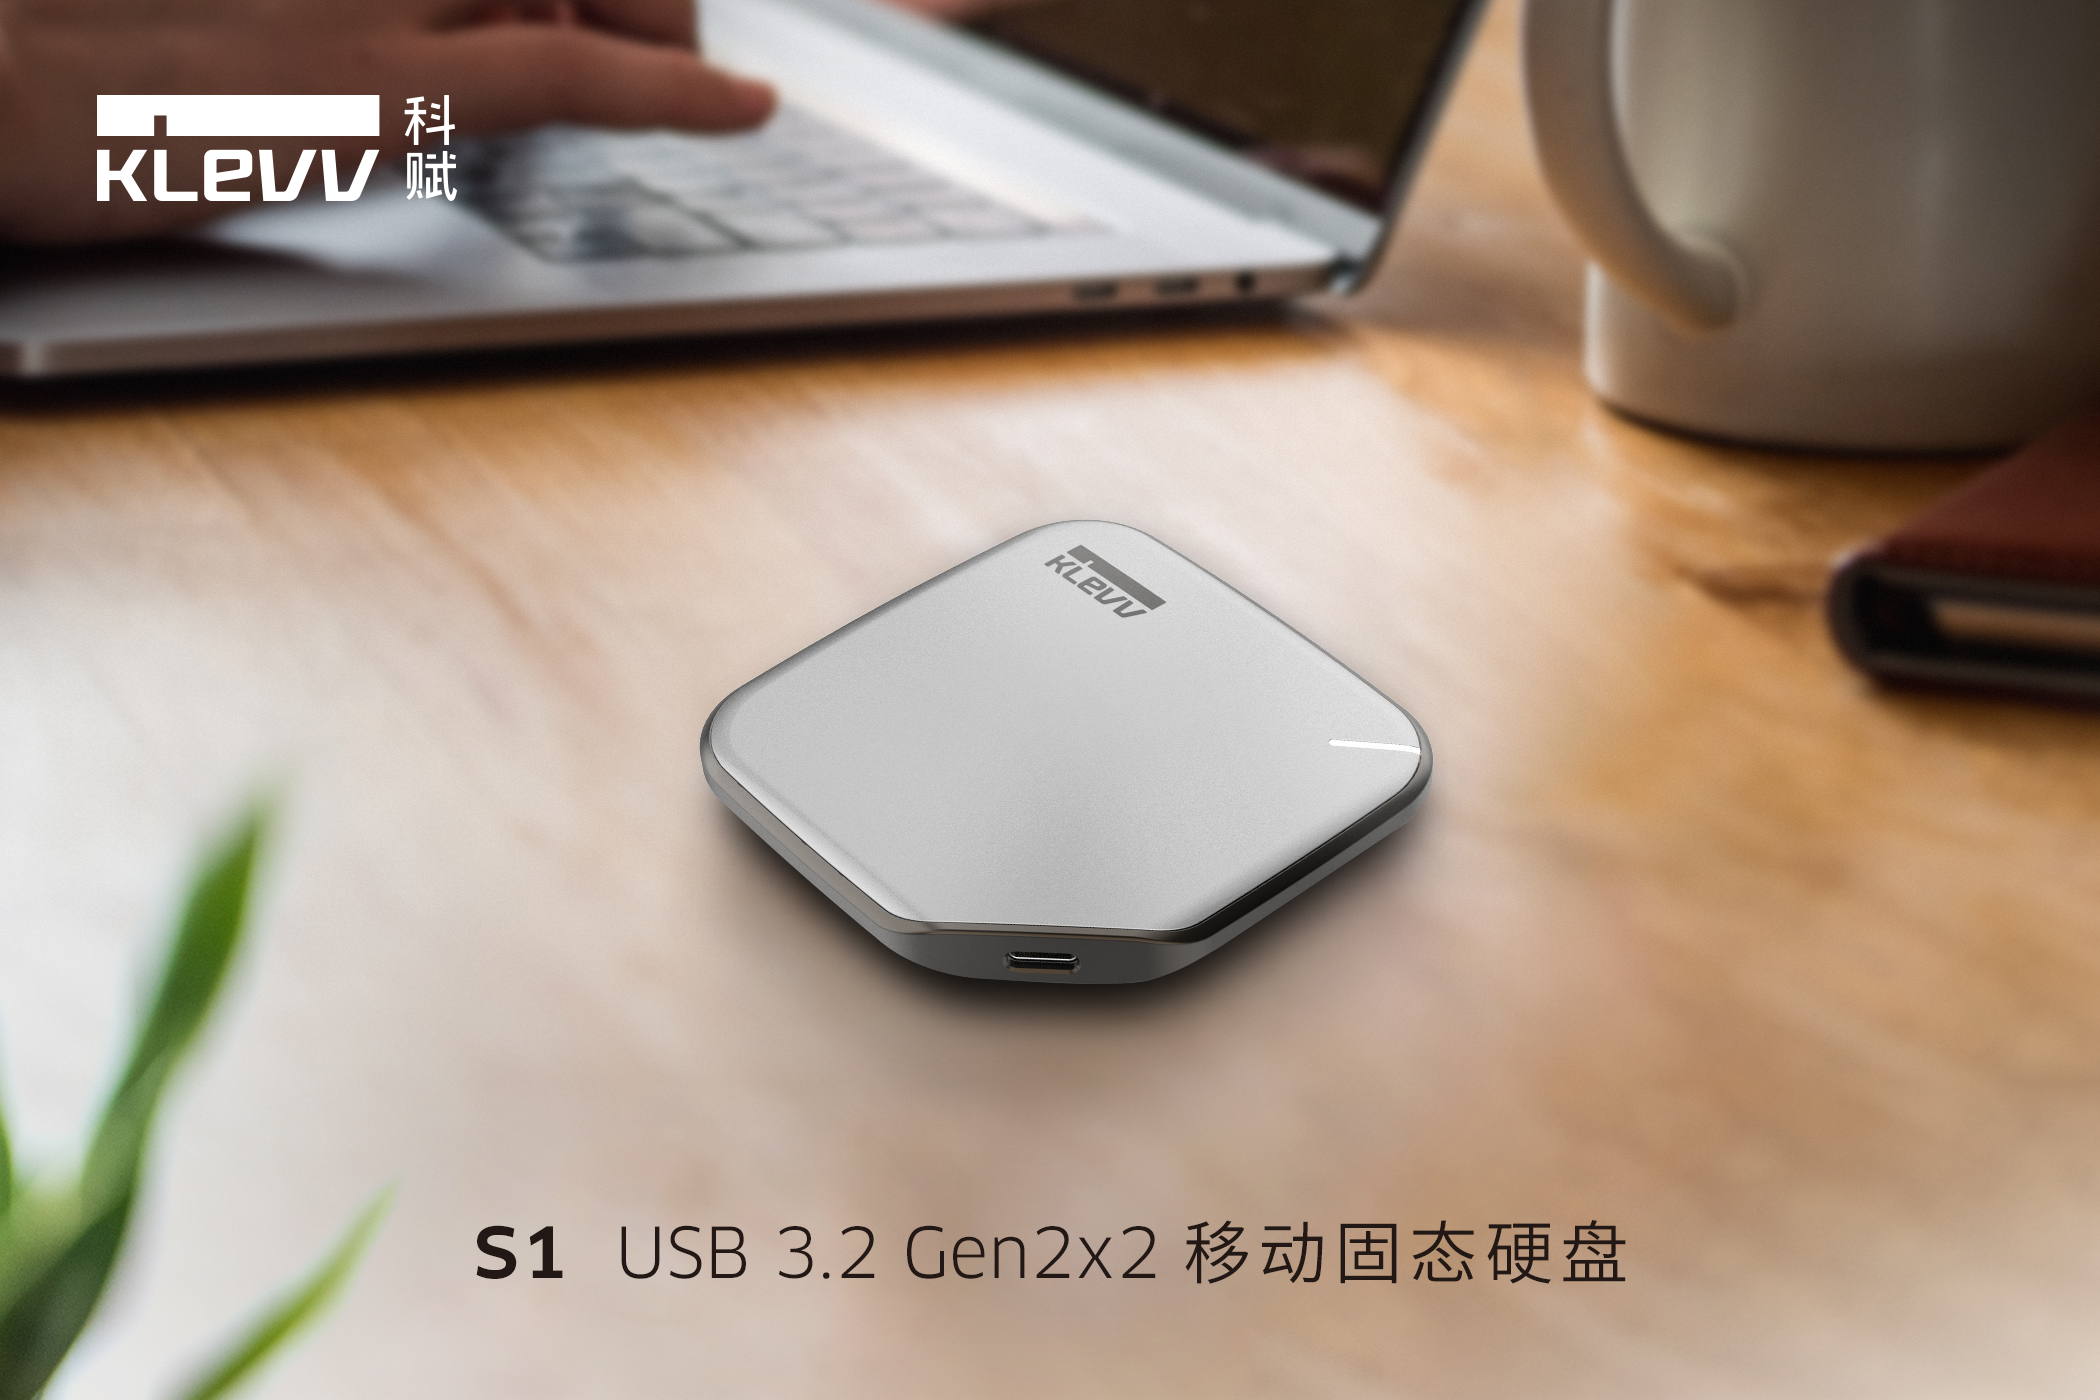 KLEVV科赋发布全新S1 USB 3.2 Gen2x2移动固态硬盘